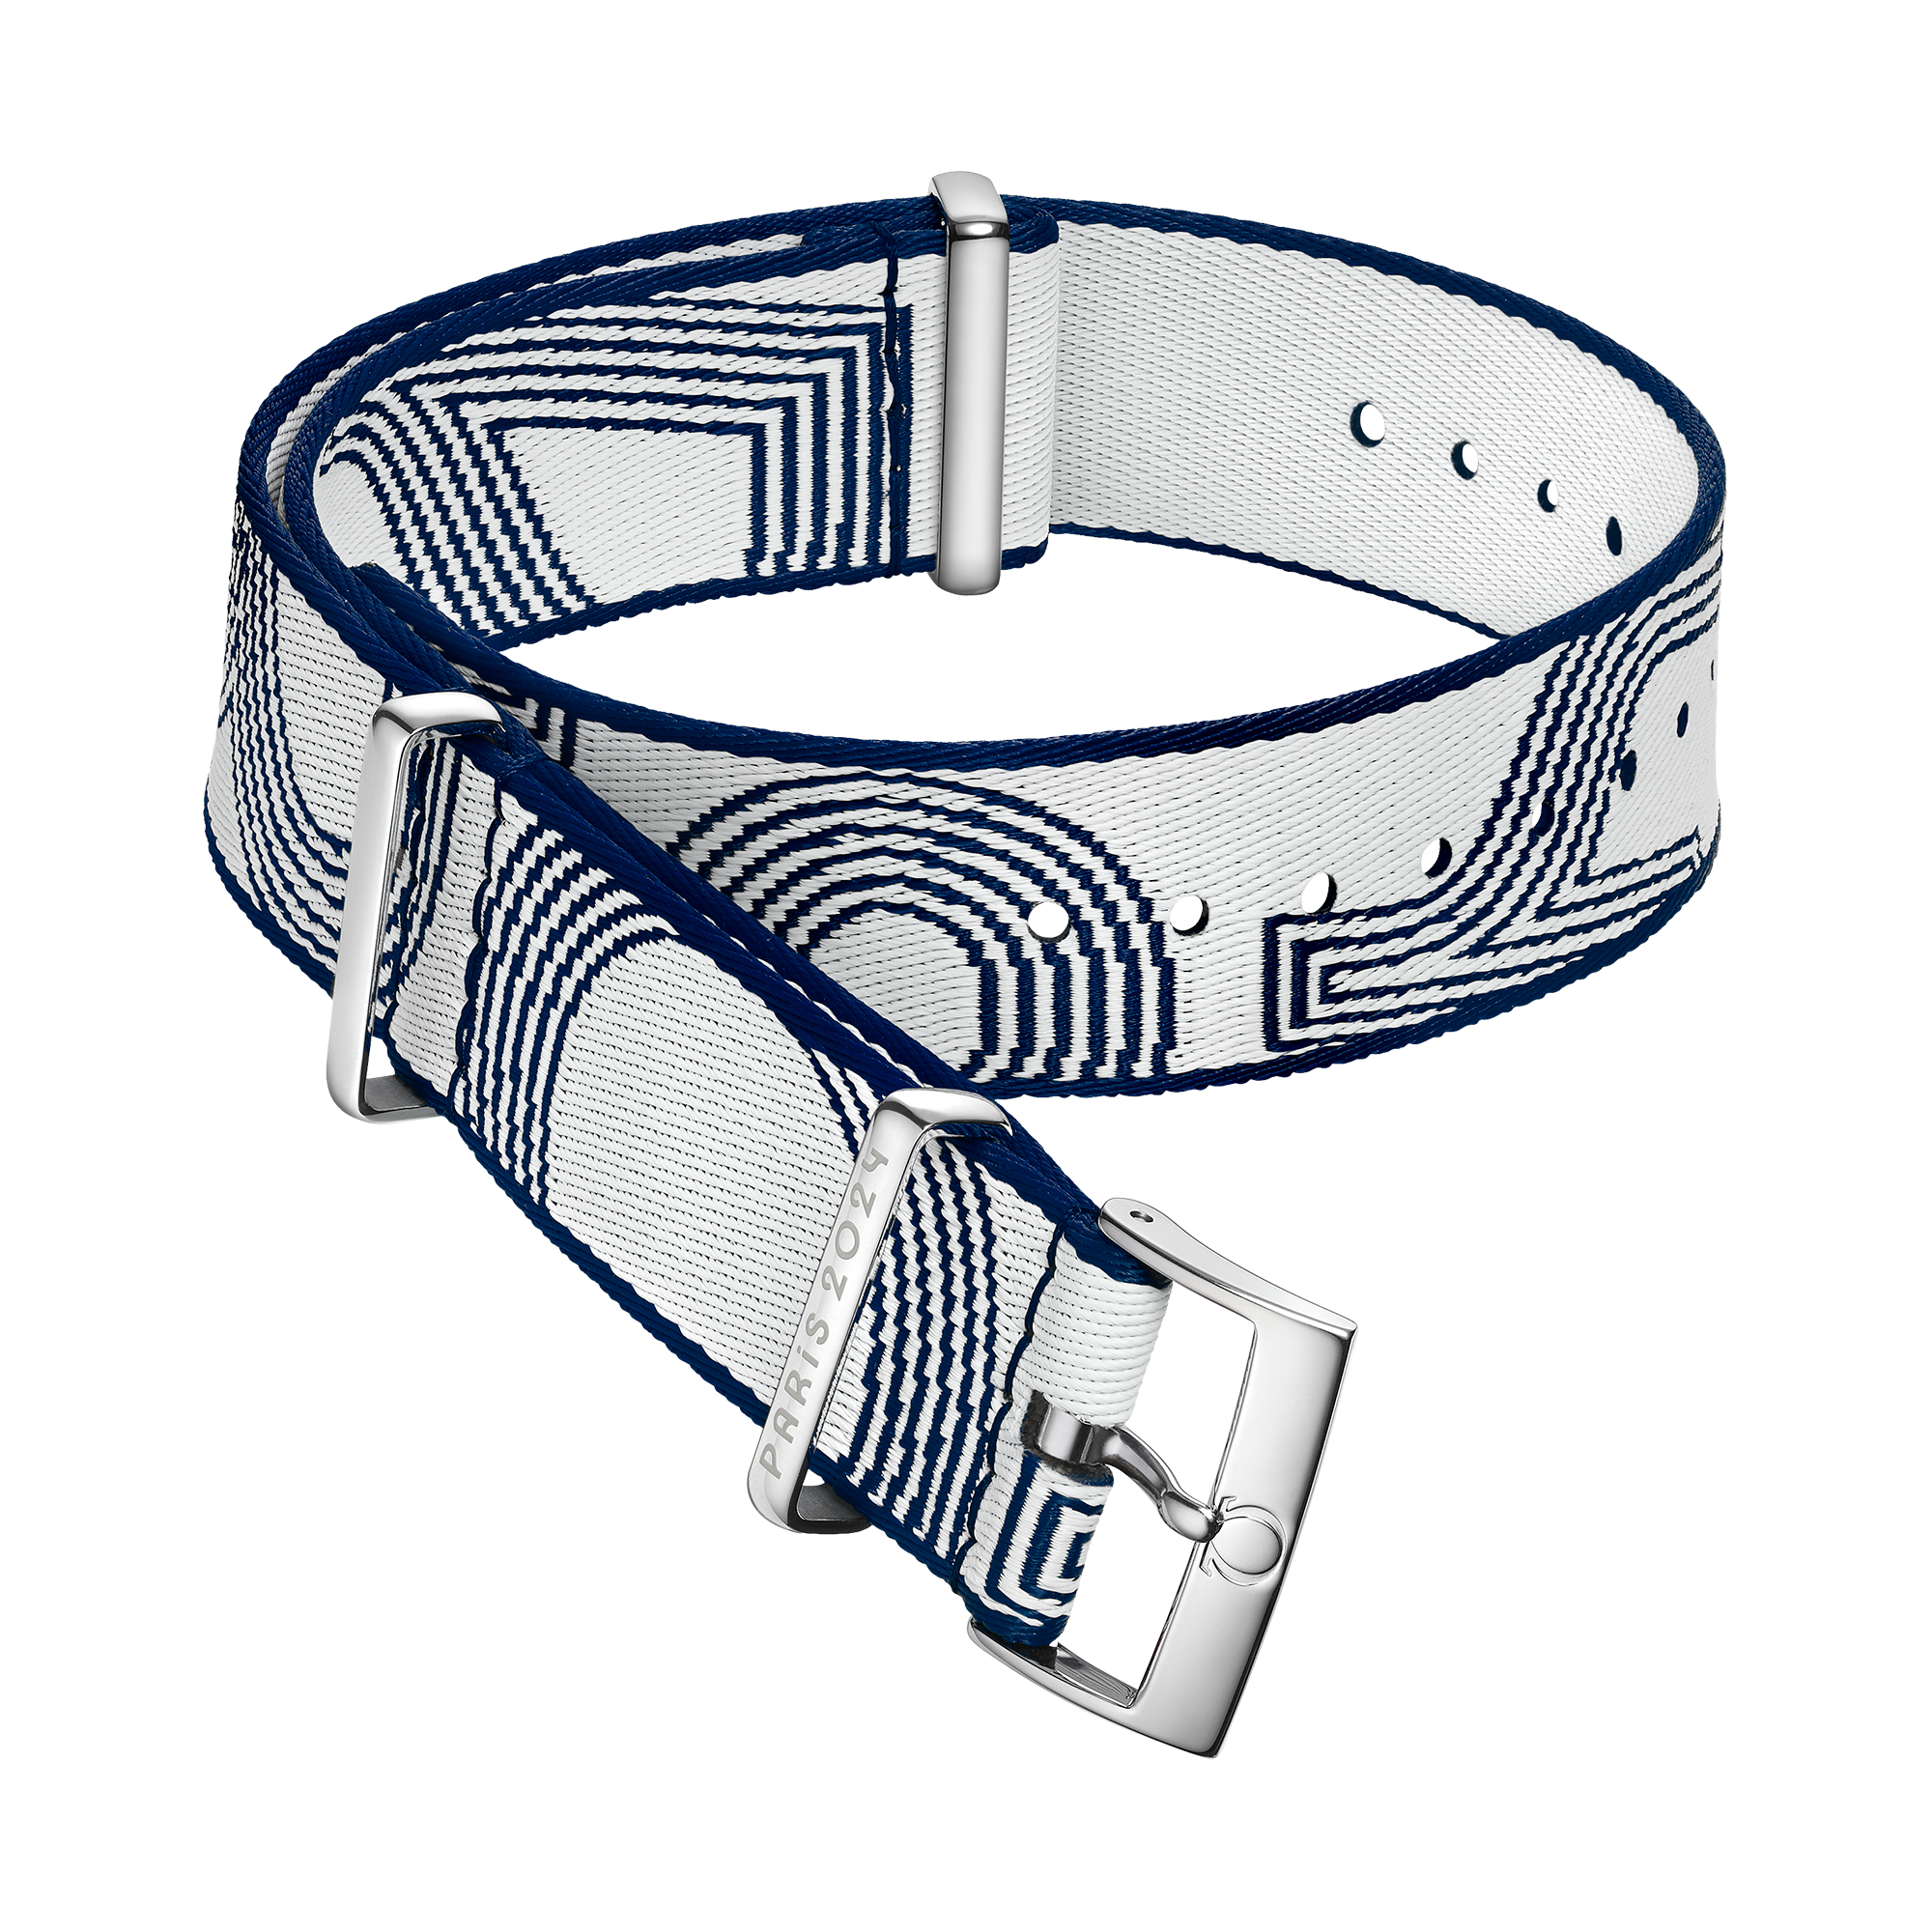 NATO strap - Polyamide white and blue strap - 031Z019138W